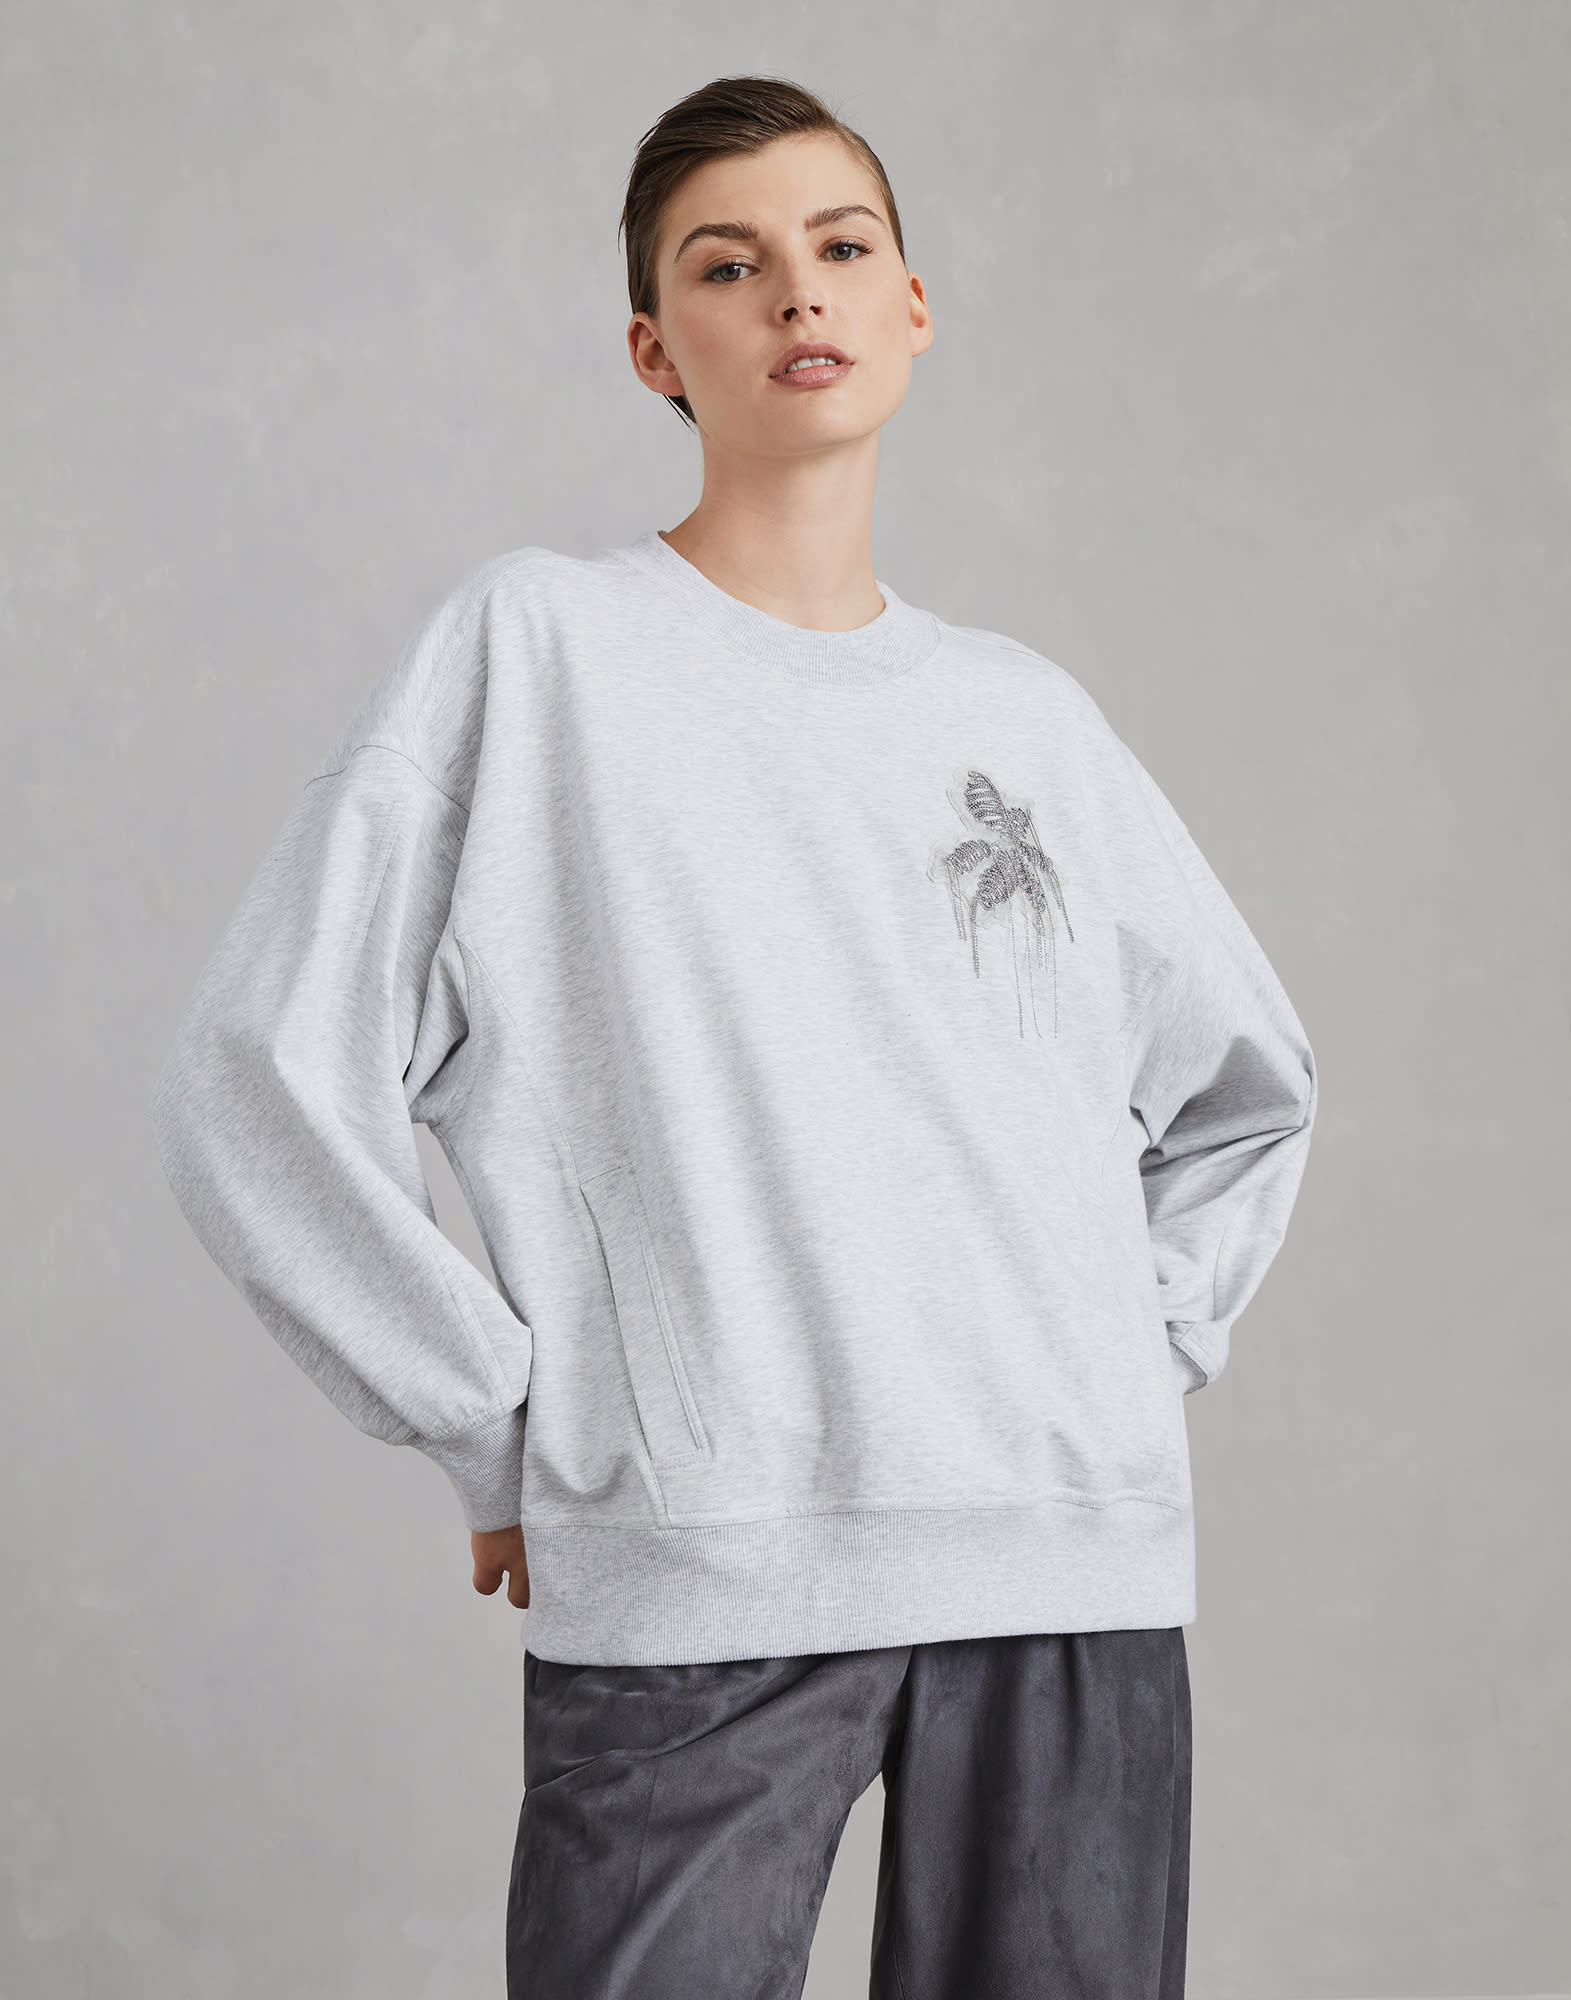 Lightweight French terry sweatshirt